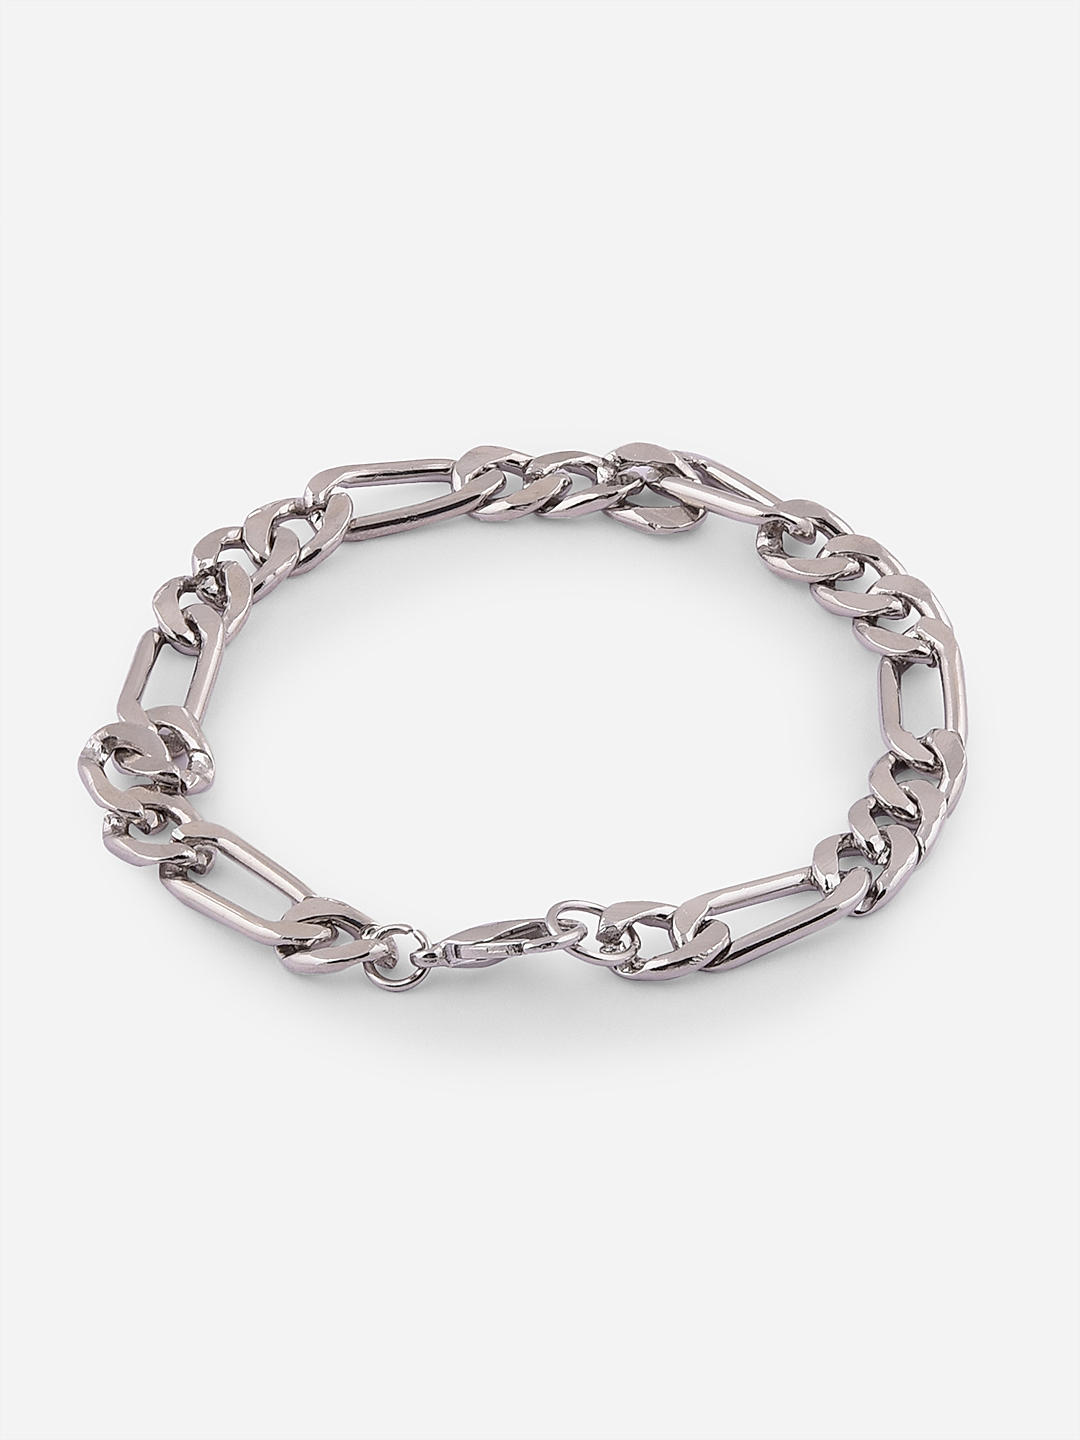 White Gold Chain Link Bracelet - Polished 3.85mm – Marke Fine Jewelry